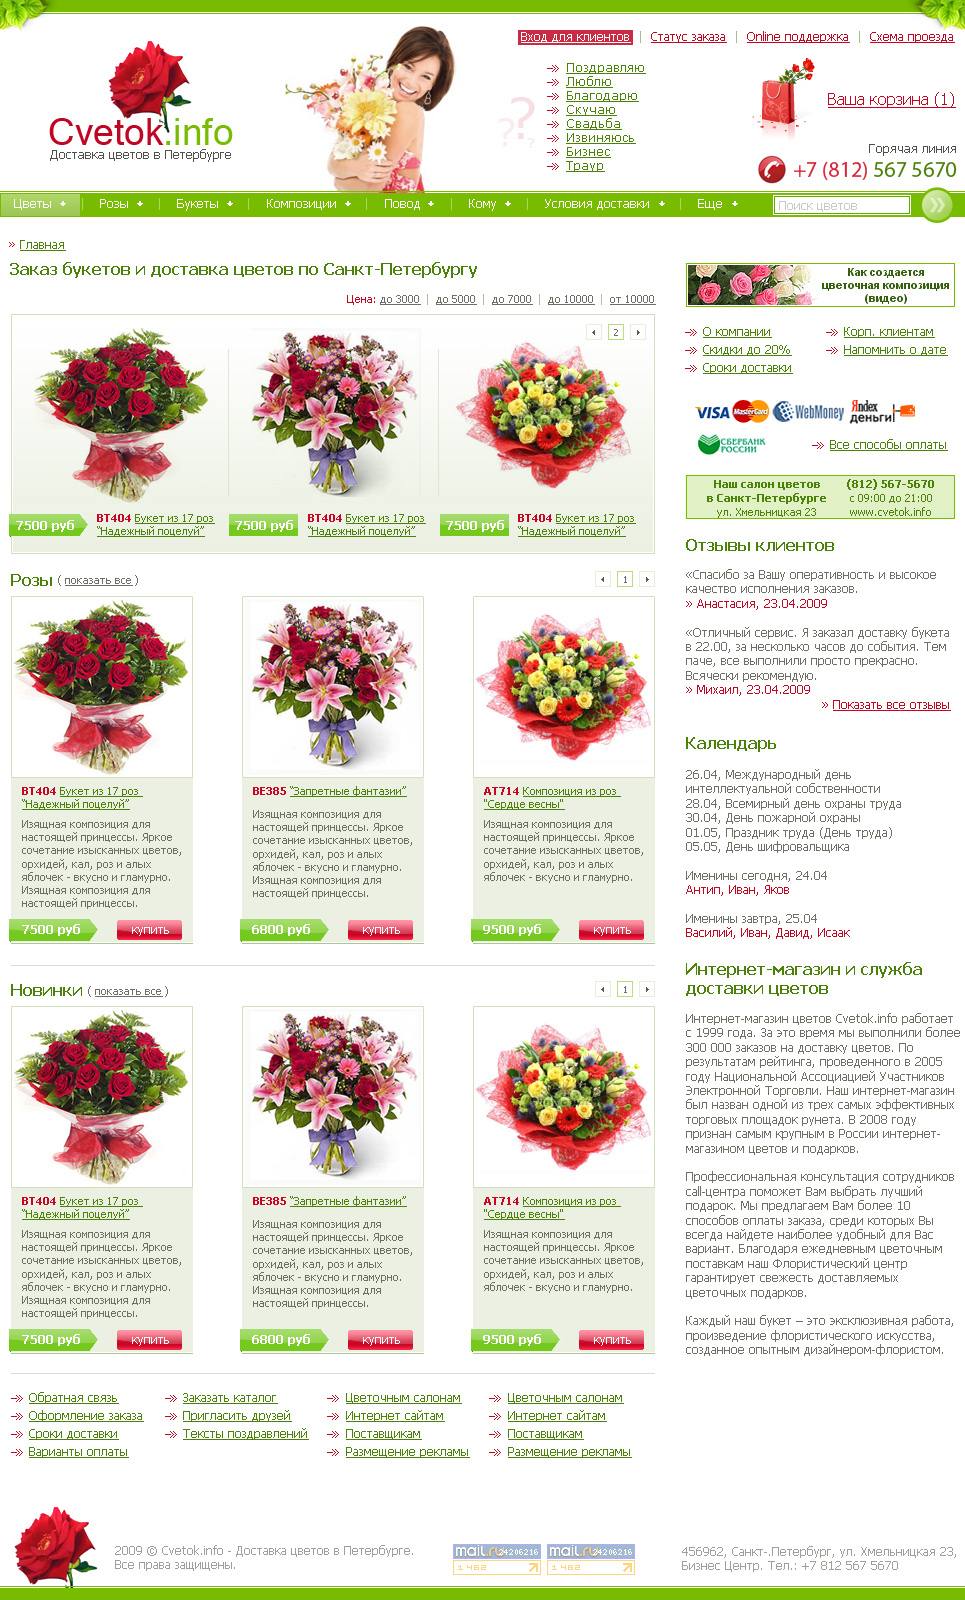 Cvetok.info | Flowers Shop